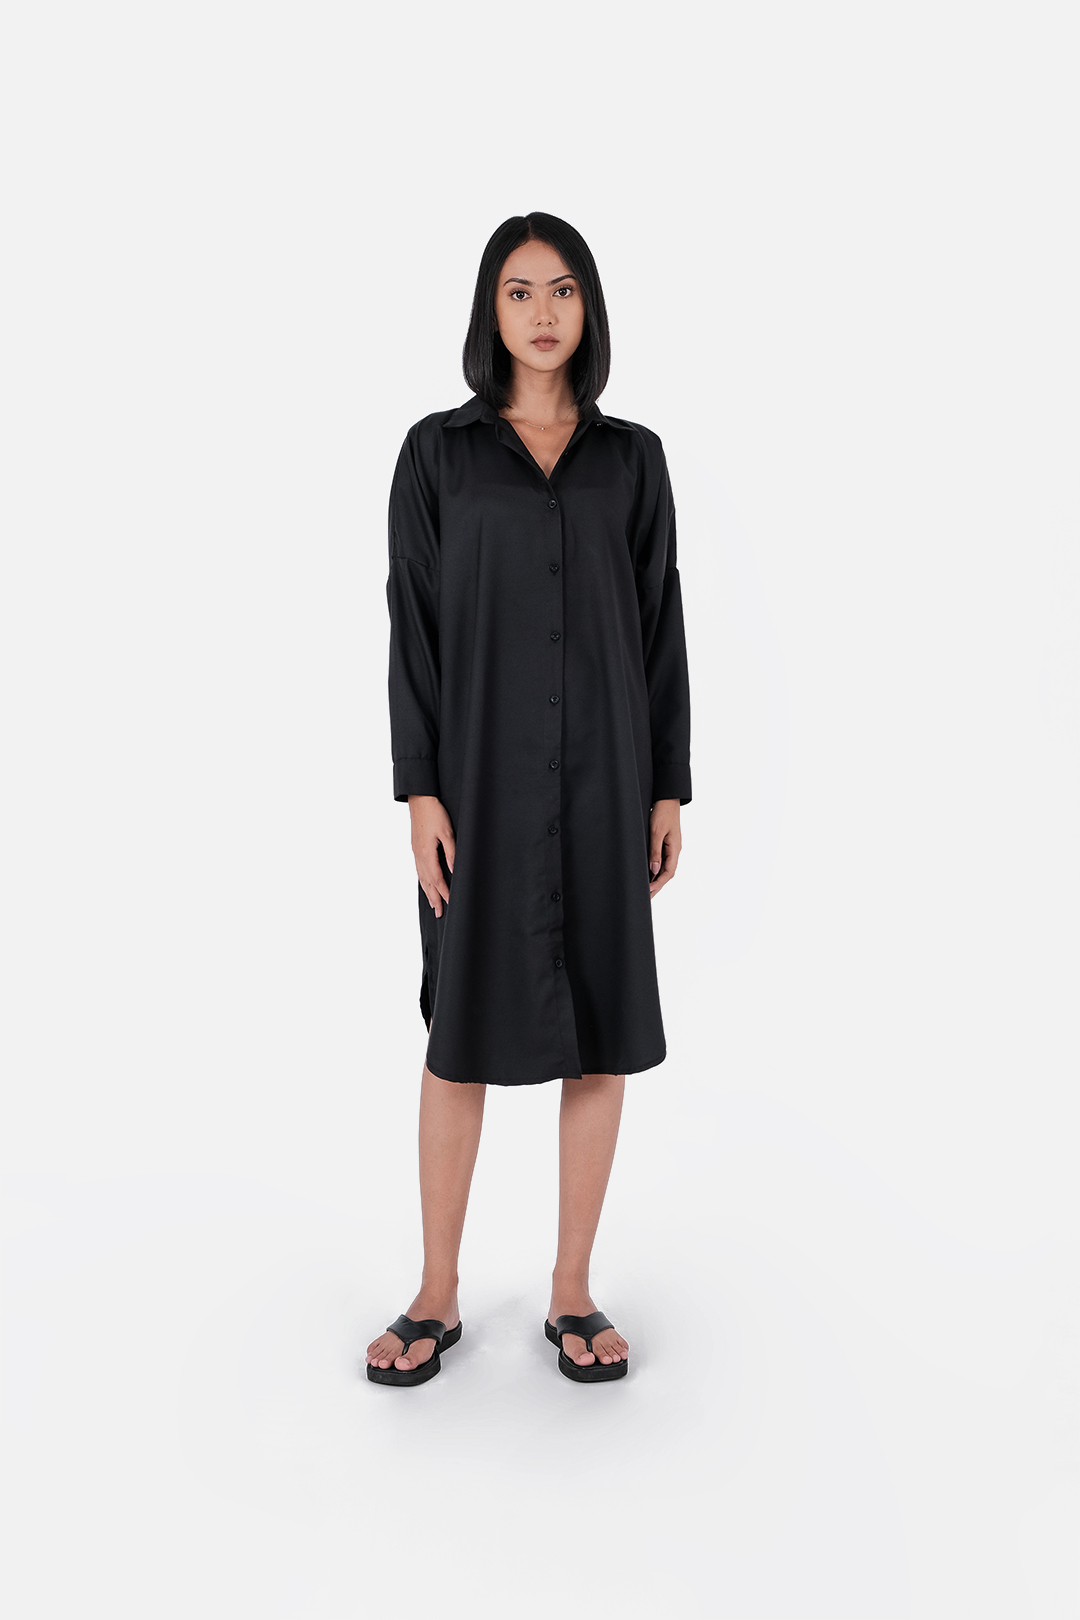 VIDOJ – MISSY BLACK SHIRT DRESS